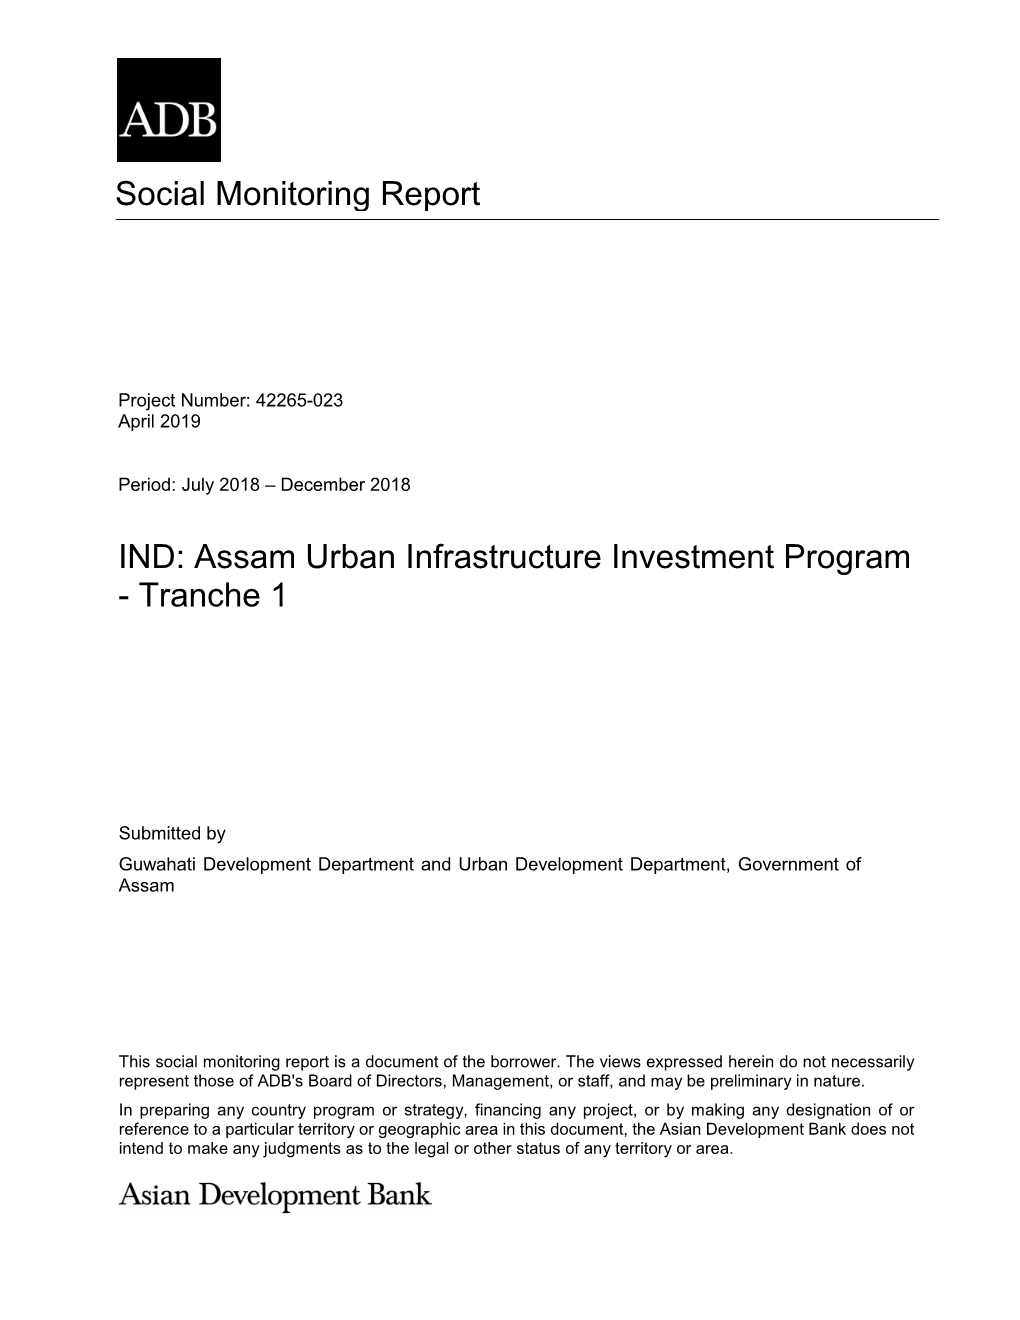 42265-023: Assam Urban Infrastructure Investment Program